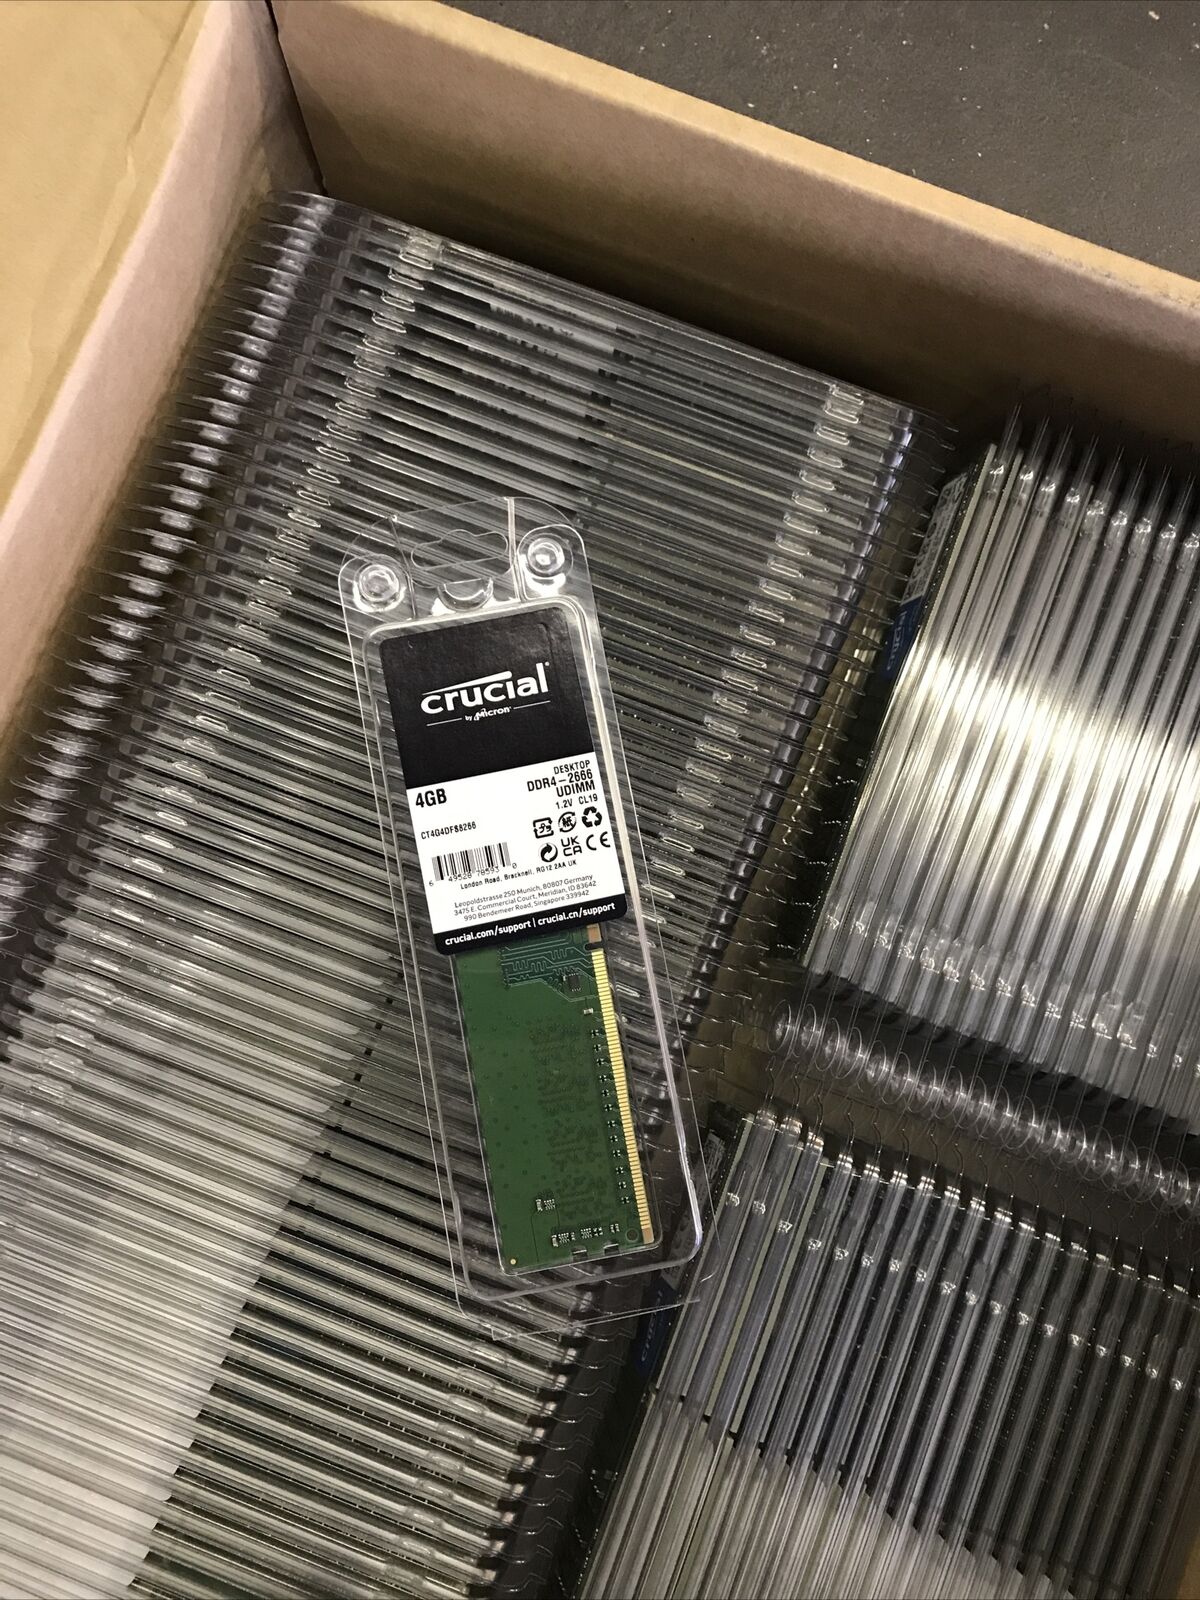 Case of 100 qty 4GB DDR4-2666 DIMM Crucial CT4G4DFS8266 Memory RAM